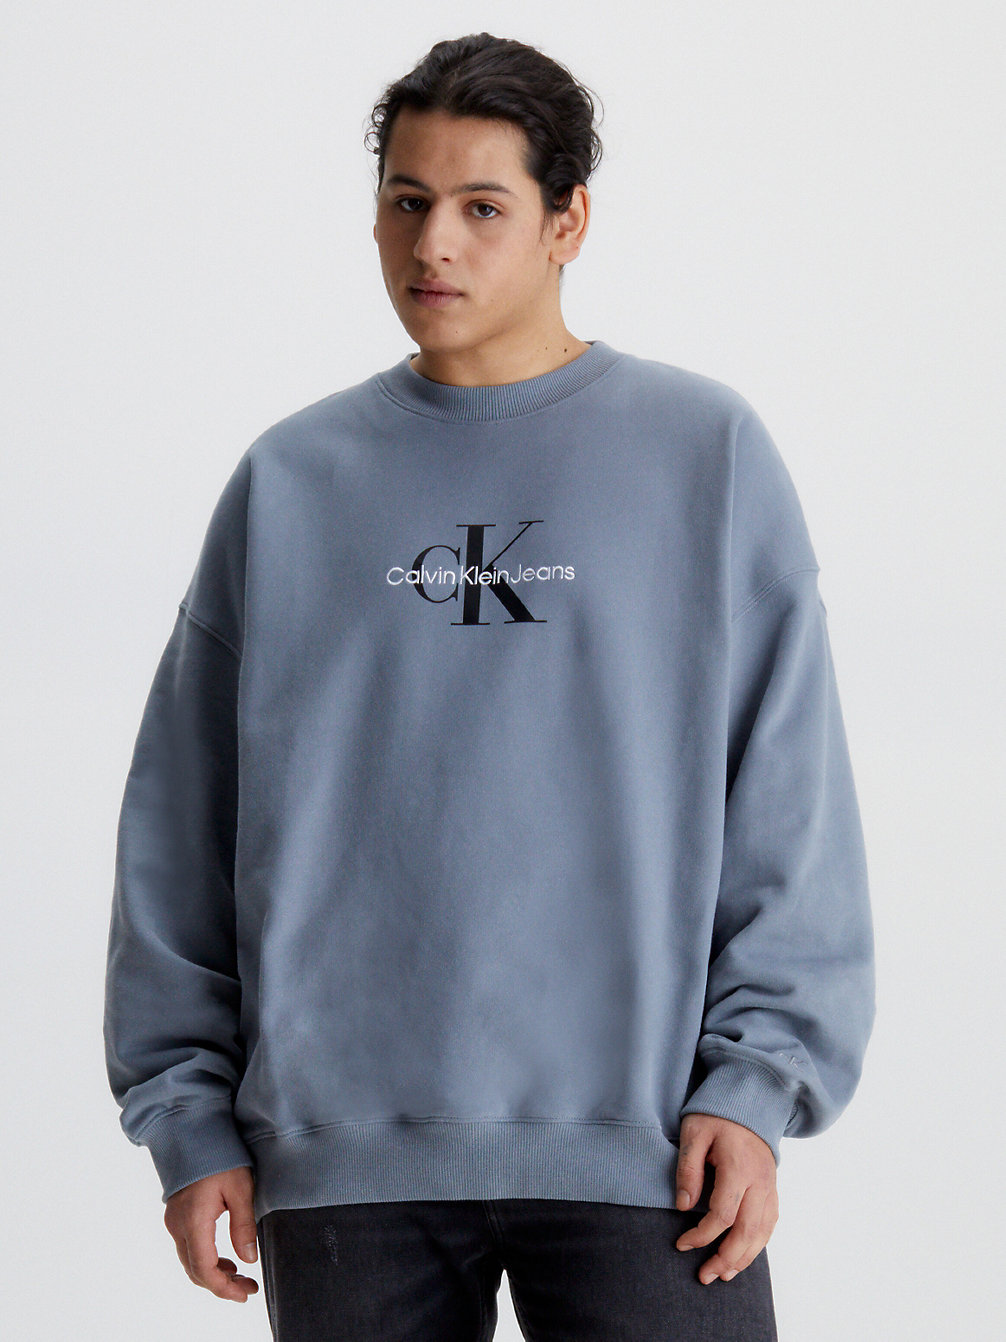 OVERCAST GREY Plus Size Monogram Sweatshirt undefined men Calvin Klein